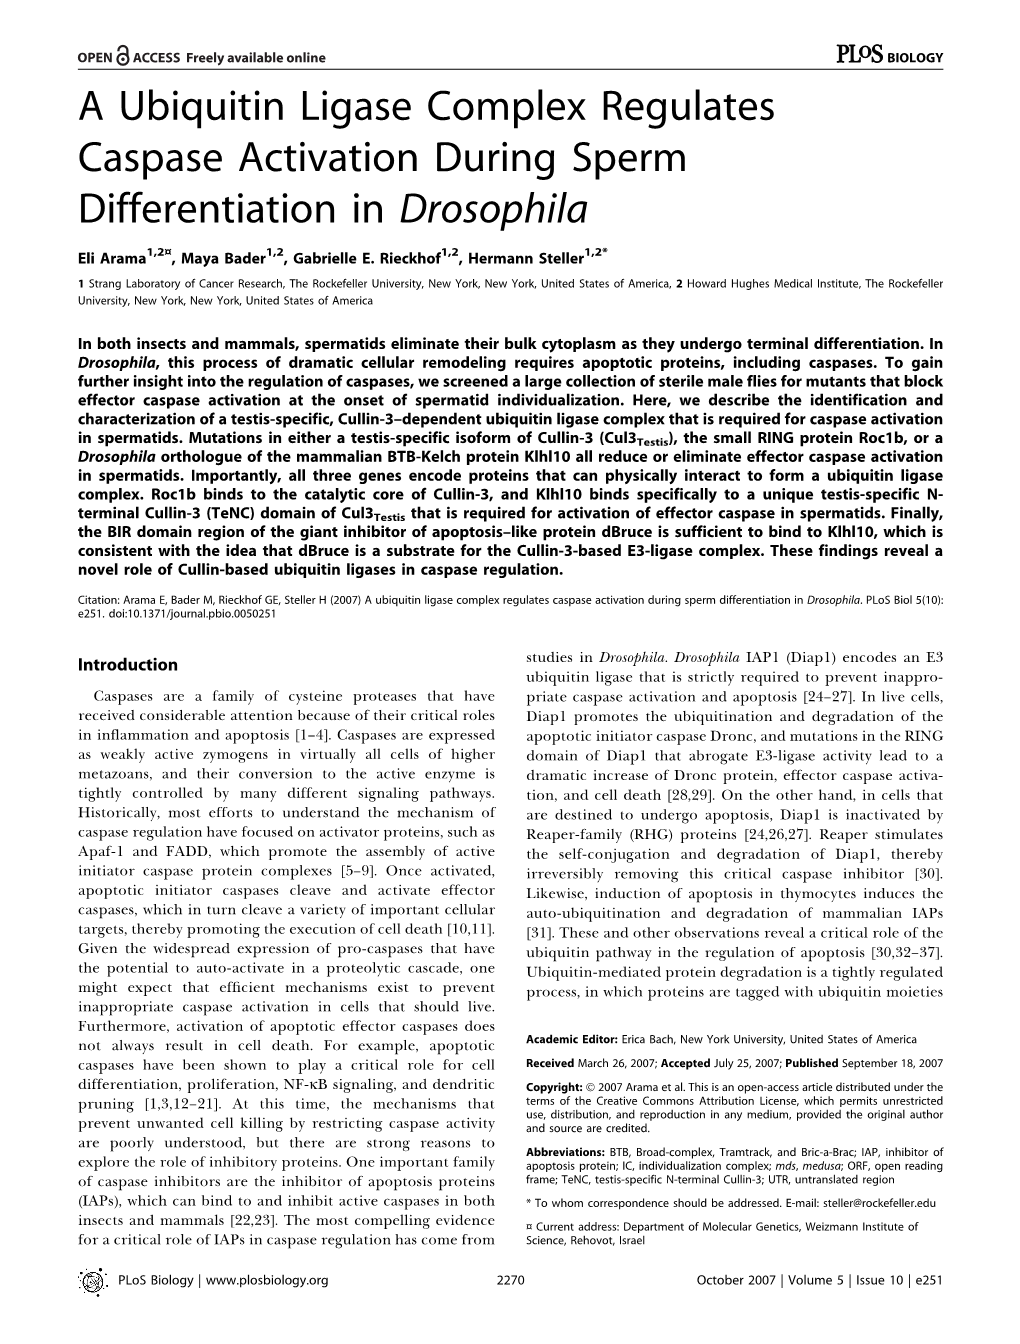 A Ubiquitin Ligase Complex Regulates Caspase Activation During Sperm Differentiation in Drosophila